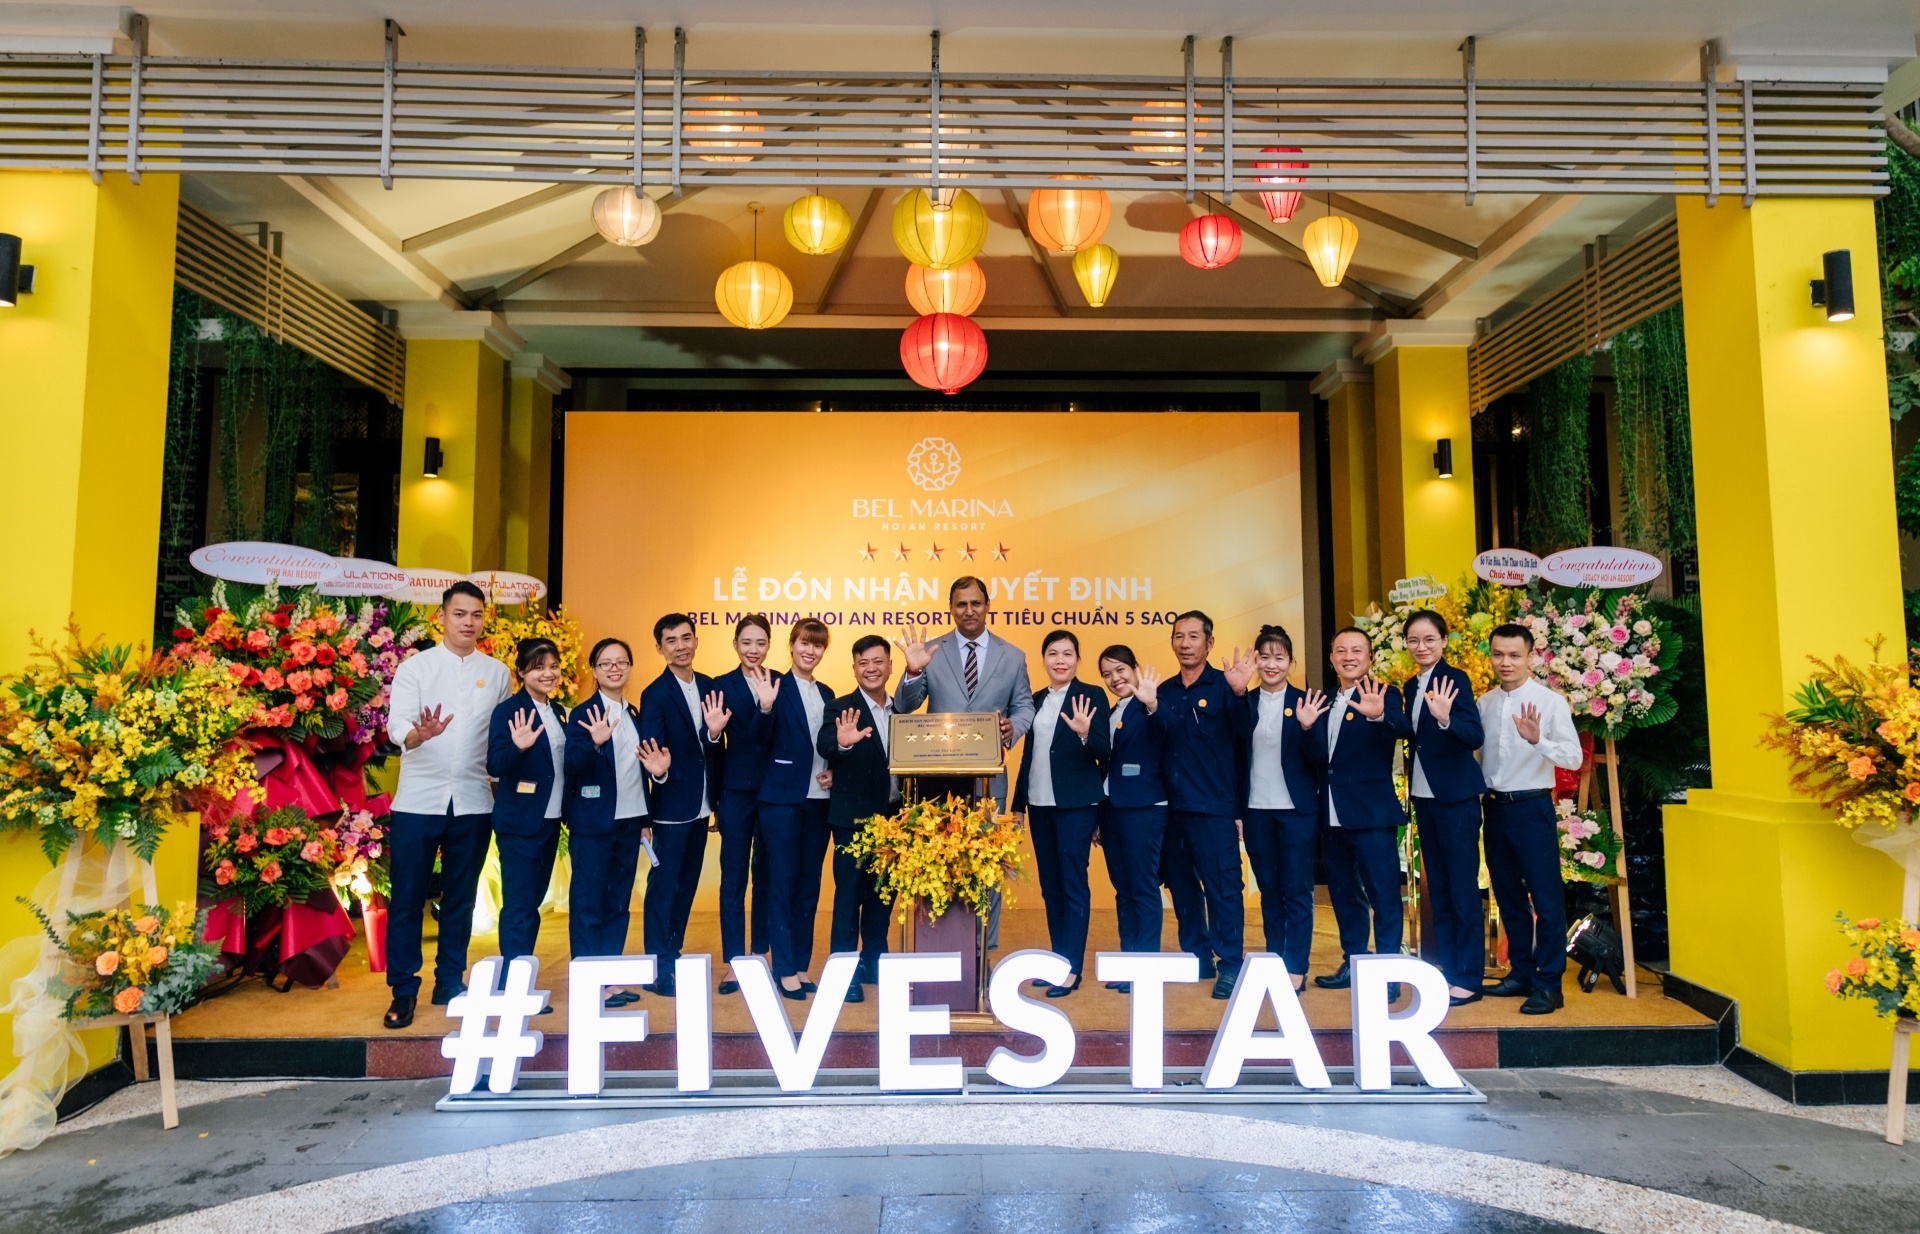 VNTA awards 5-star certification to Bel Marina Hoi An Resort